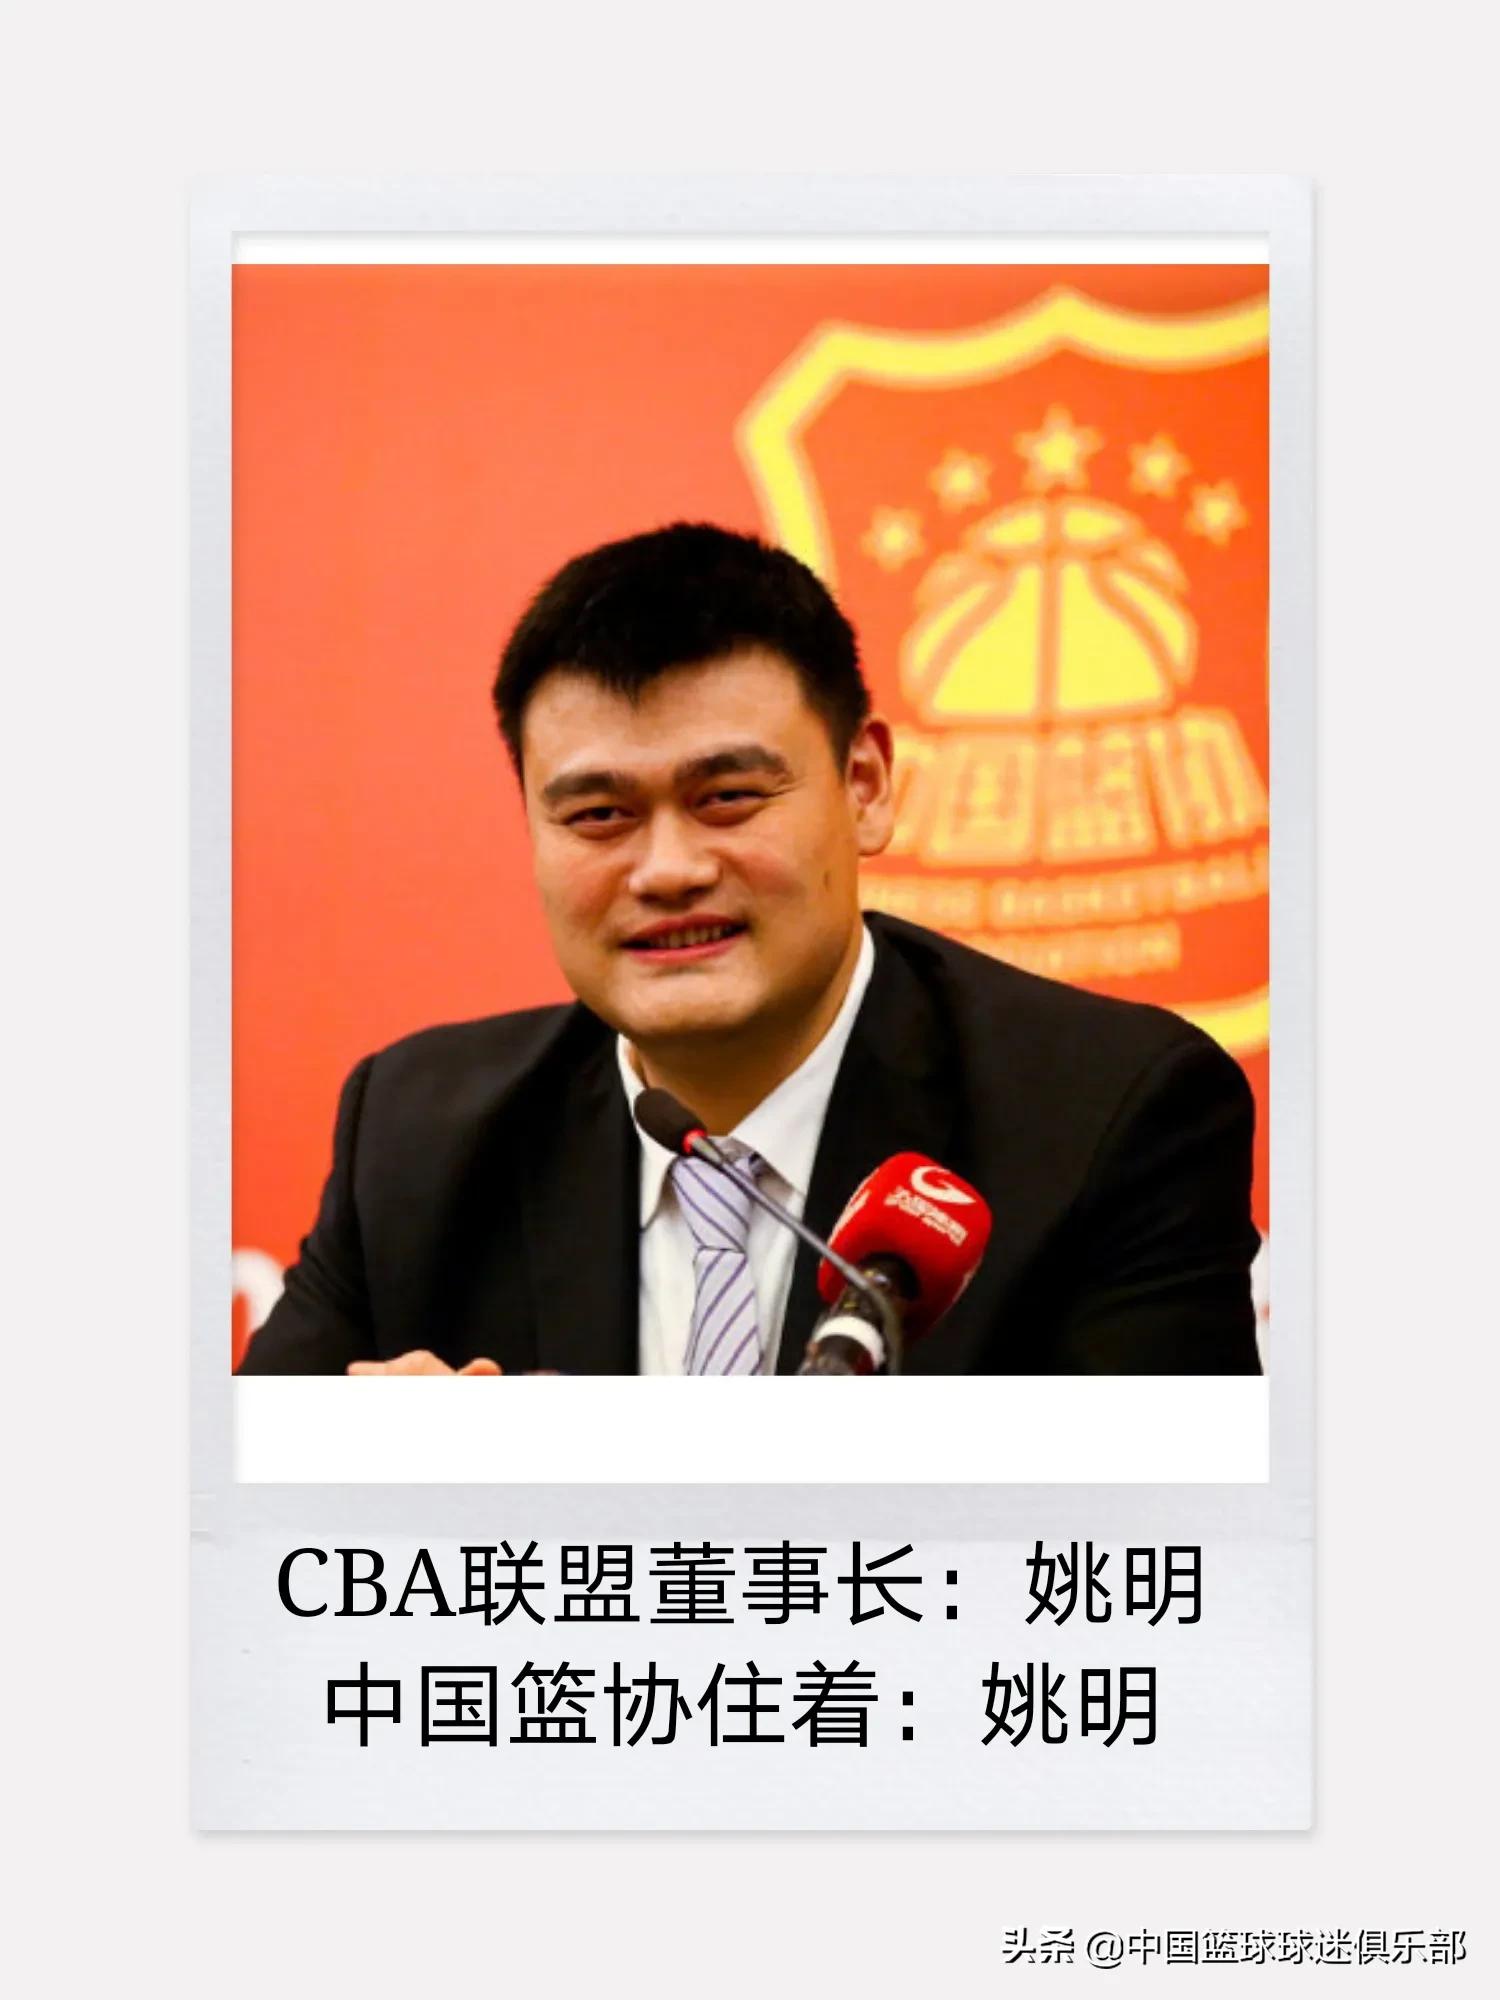 cba中国篮球协会全称(姚明：篮协主席和CBA董事长，鱼与熊掌不可兼得！)